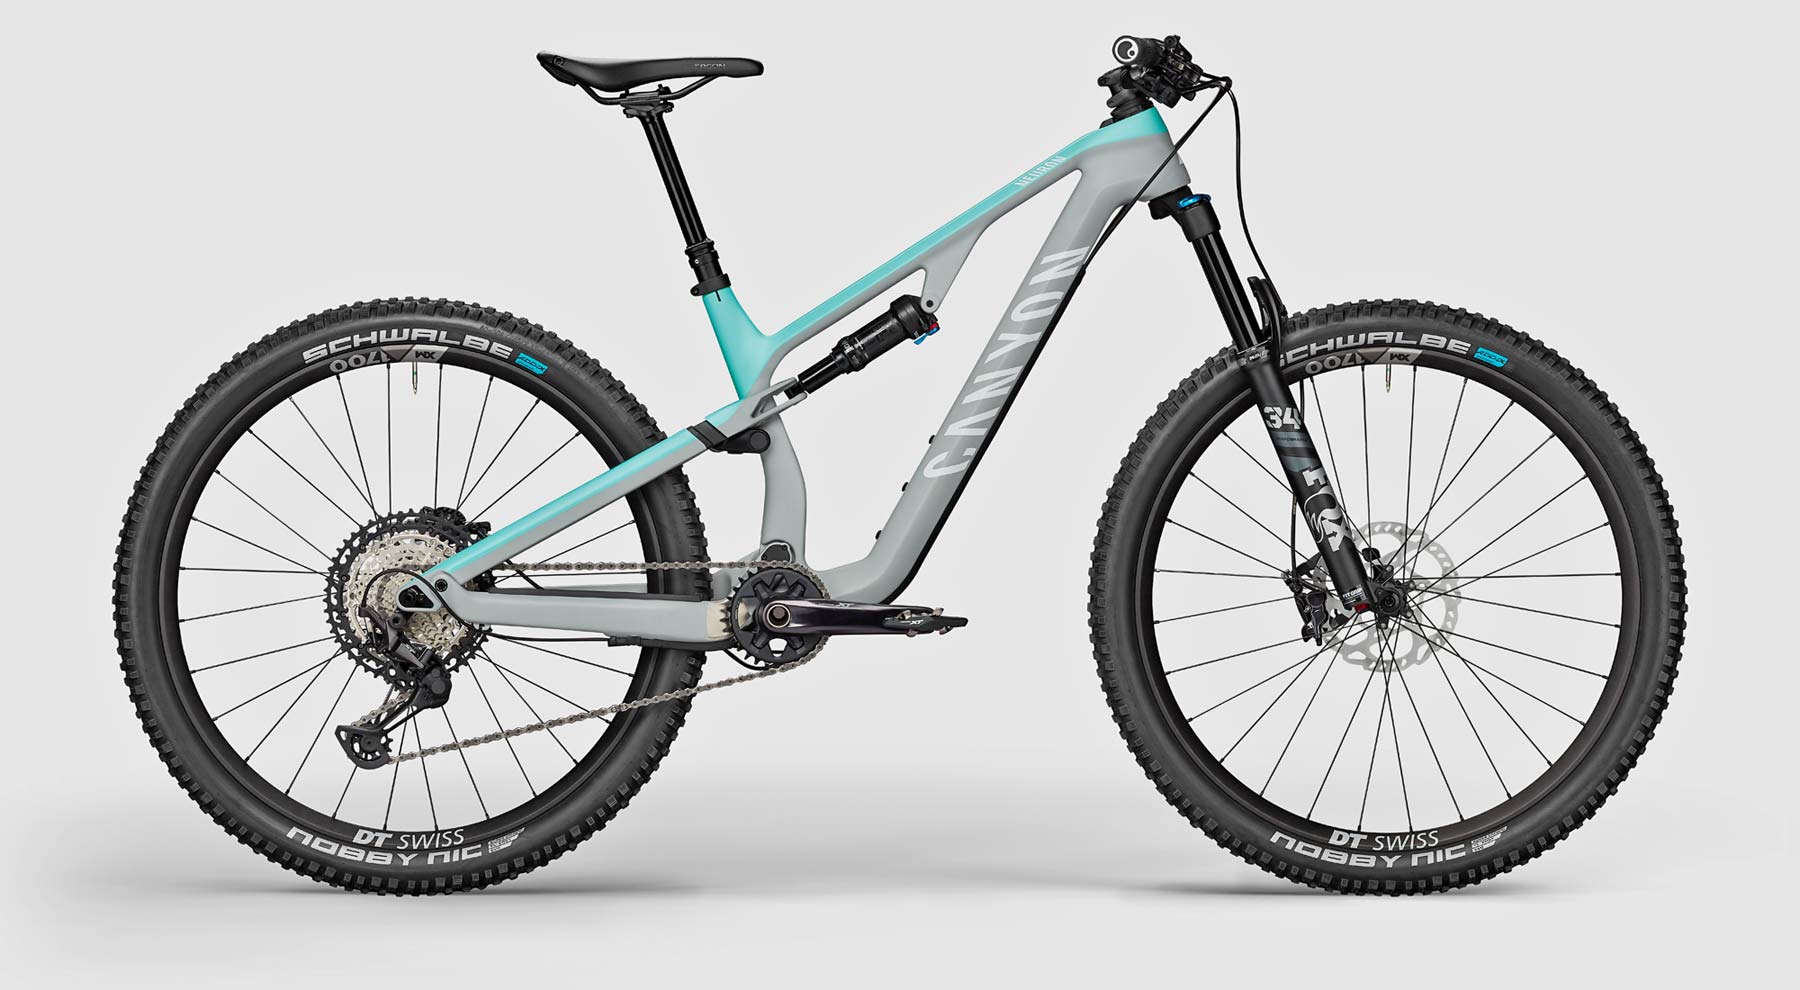 2021 Canyon Neuron mountain bike, 29er 27.5" 130mm all-mountain trail bike in alloy or carbon, CF 9 WMN